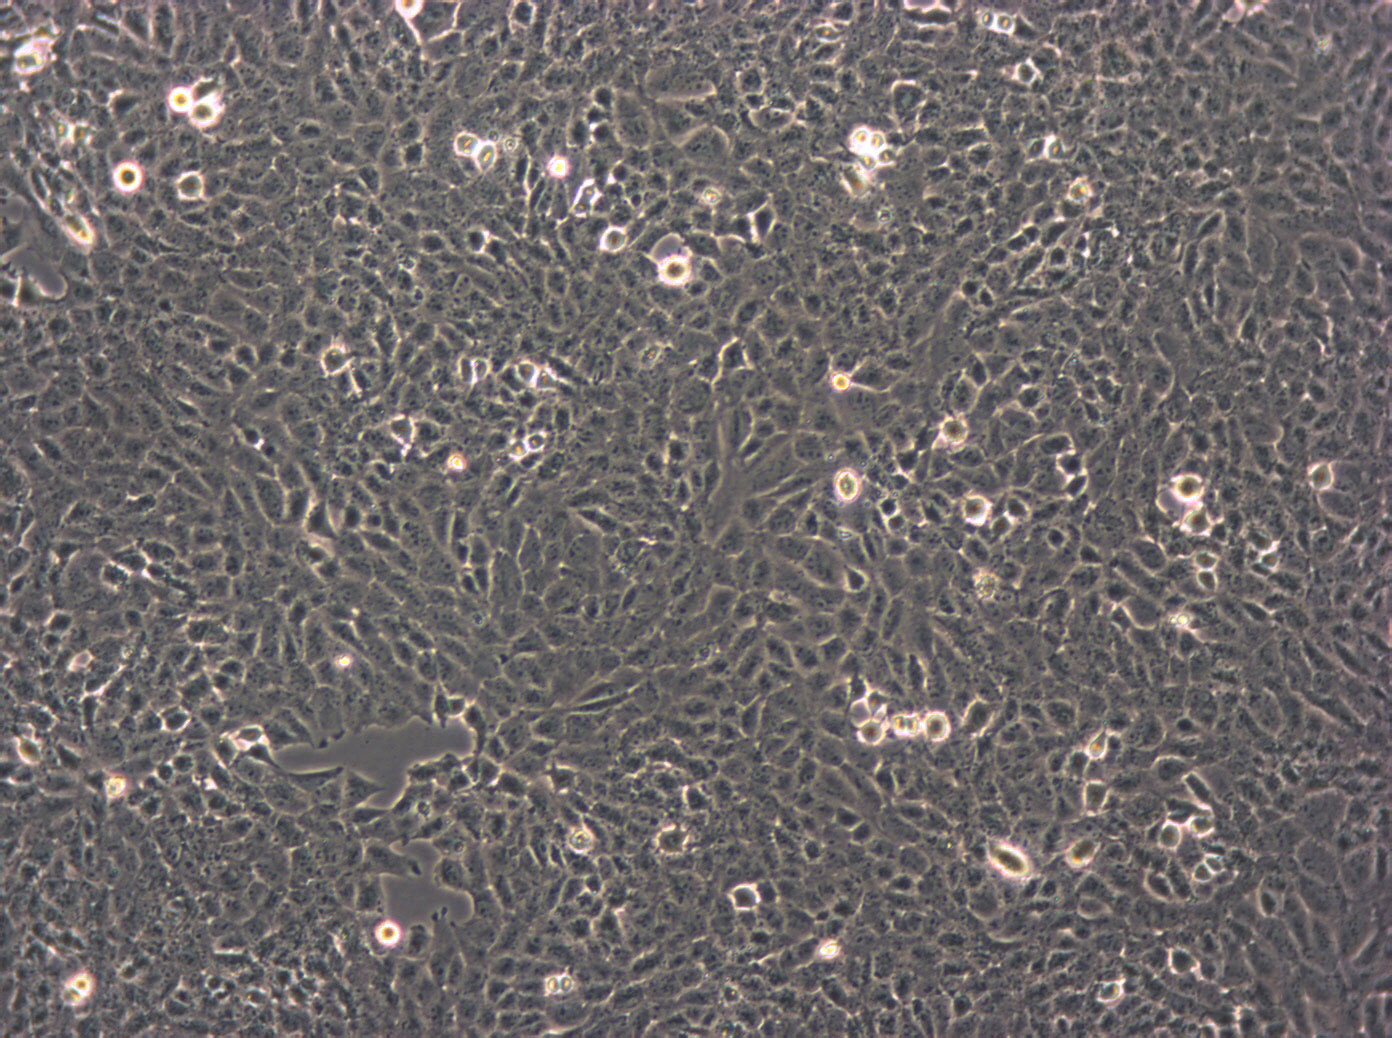 BEAS-2B cell line人支气管上皮细胞系